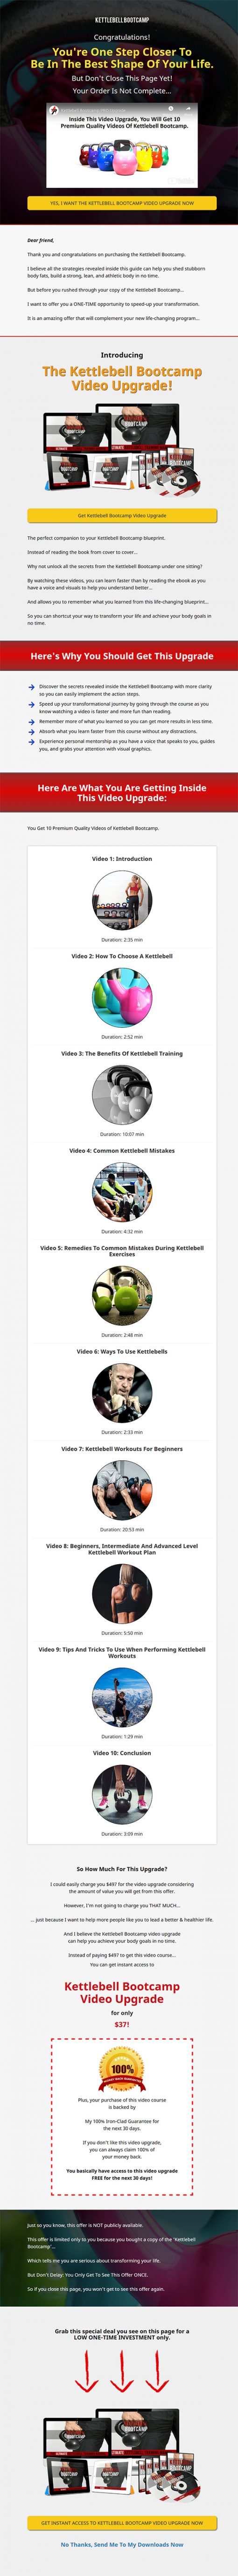 Kettlebell Bootcamp Ebook and Videos MRR